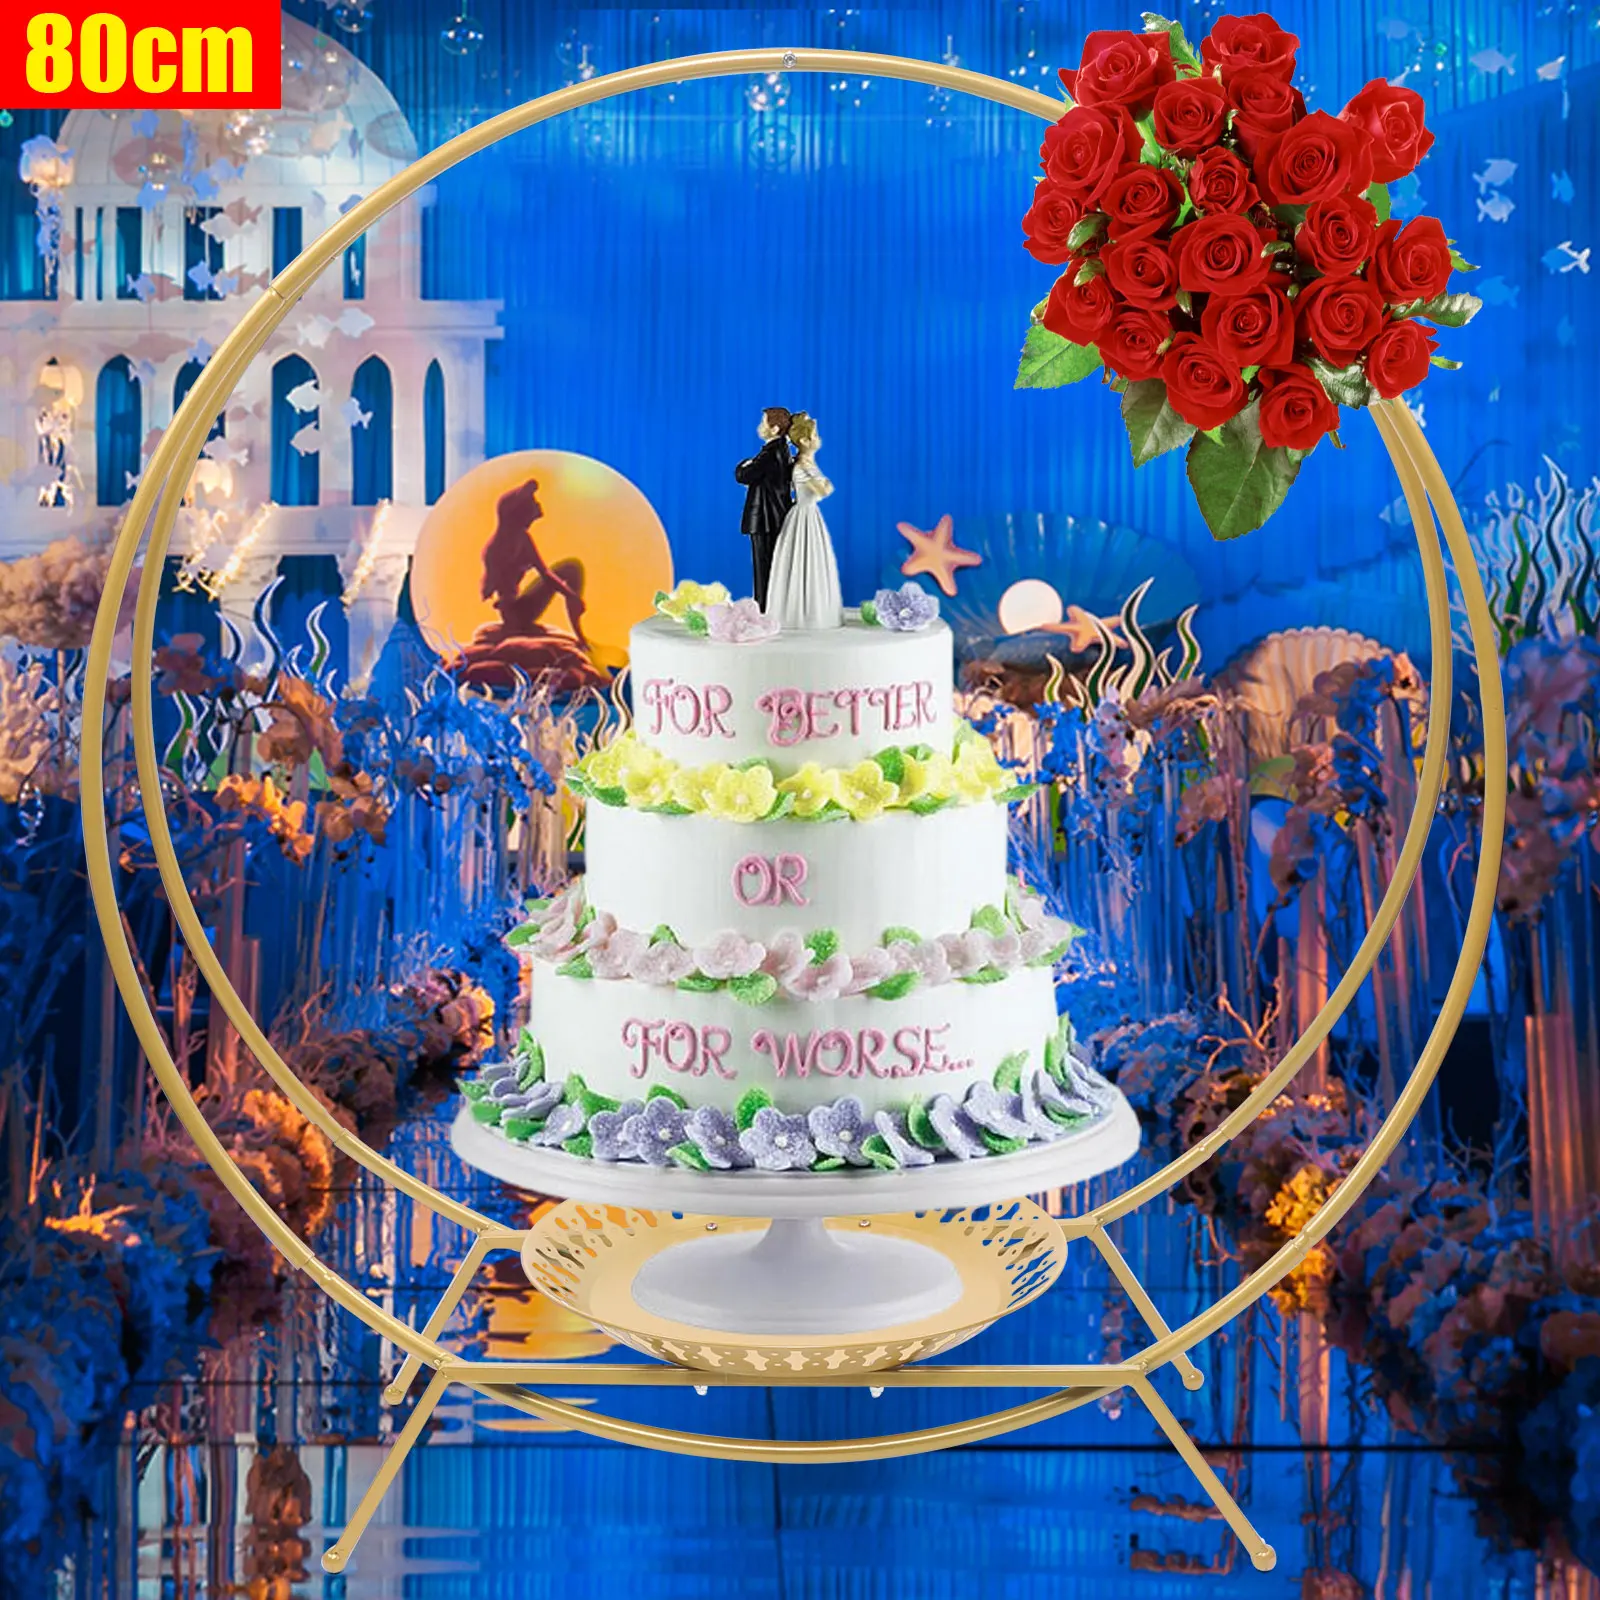 Estante de arco de boda de doble círculo de 80cm, soporte de exhibición de pasteles, globos, soporte de flores, fondo plateado/dorado